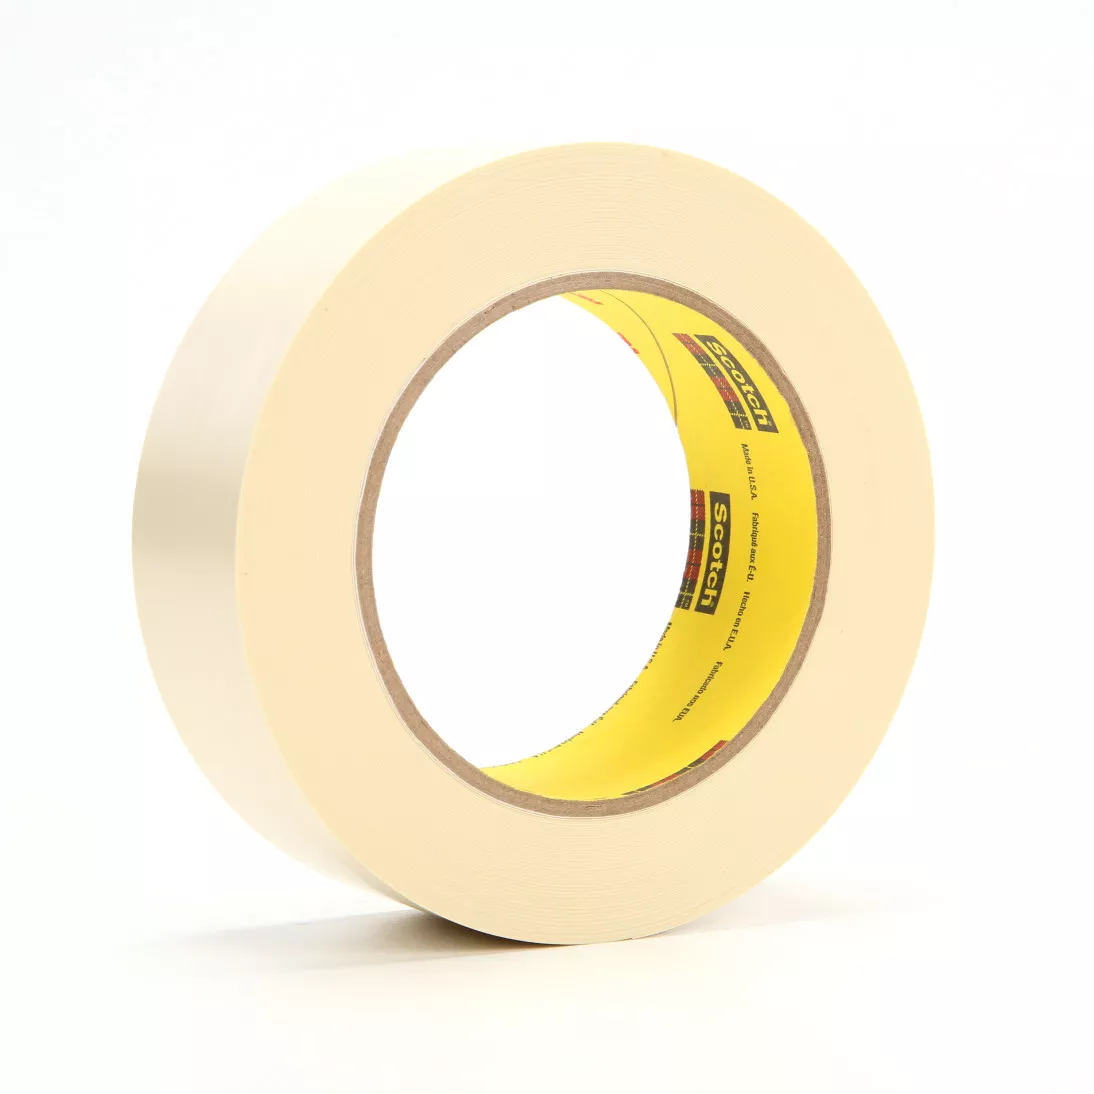 3M™ Electroplating Tape 470, Tan, 1 1/2 in x 36 yd, 7.1 mil, 24 rolls
per case